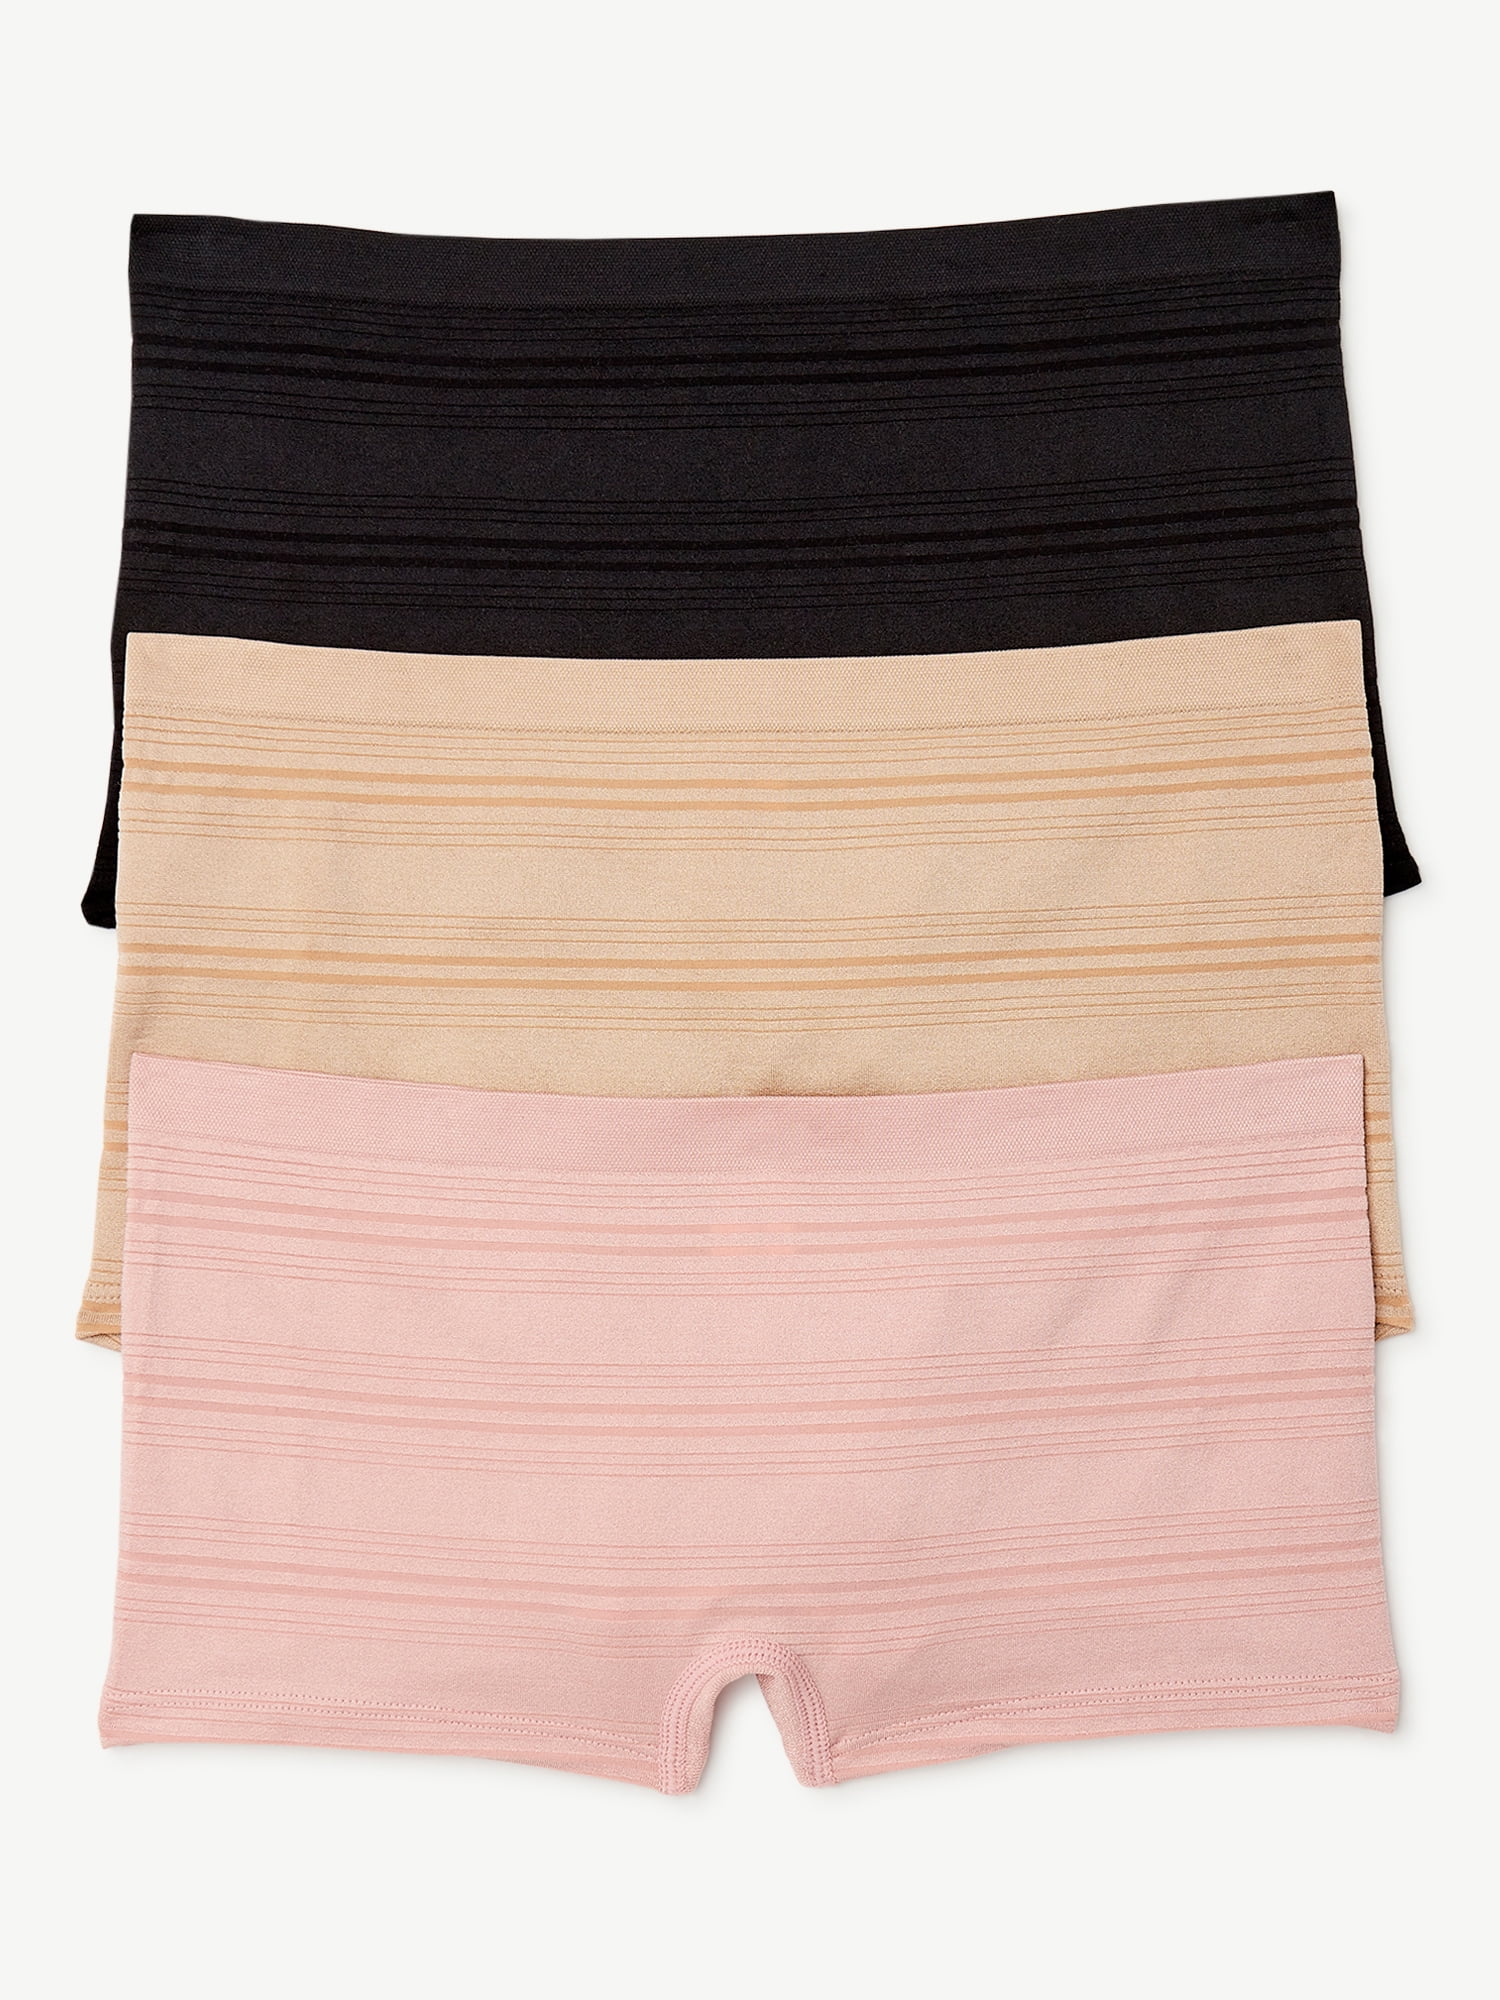 Joyspun Women's Cotton Brief Panties, 6-Pack, Sizes M to 3XL 